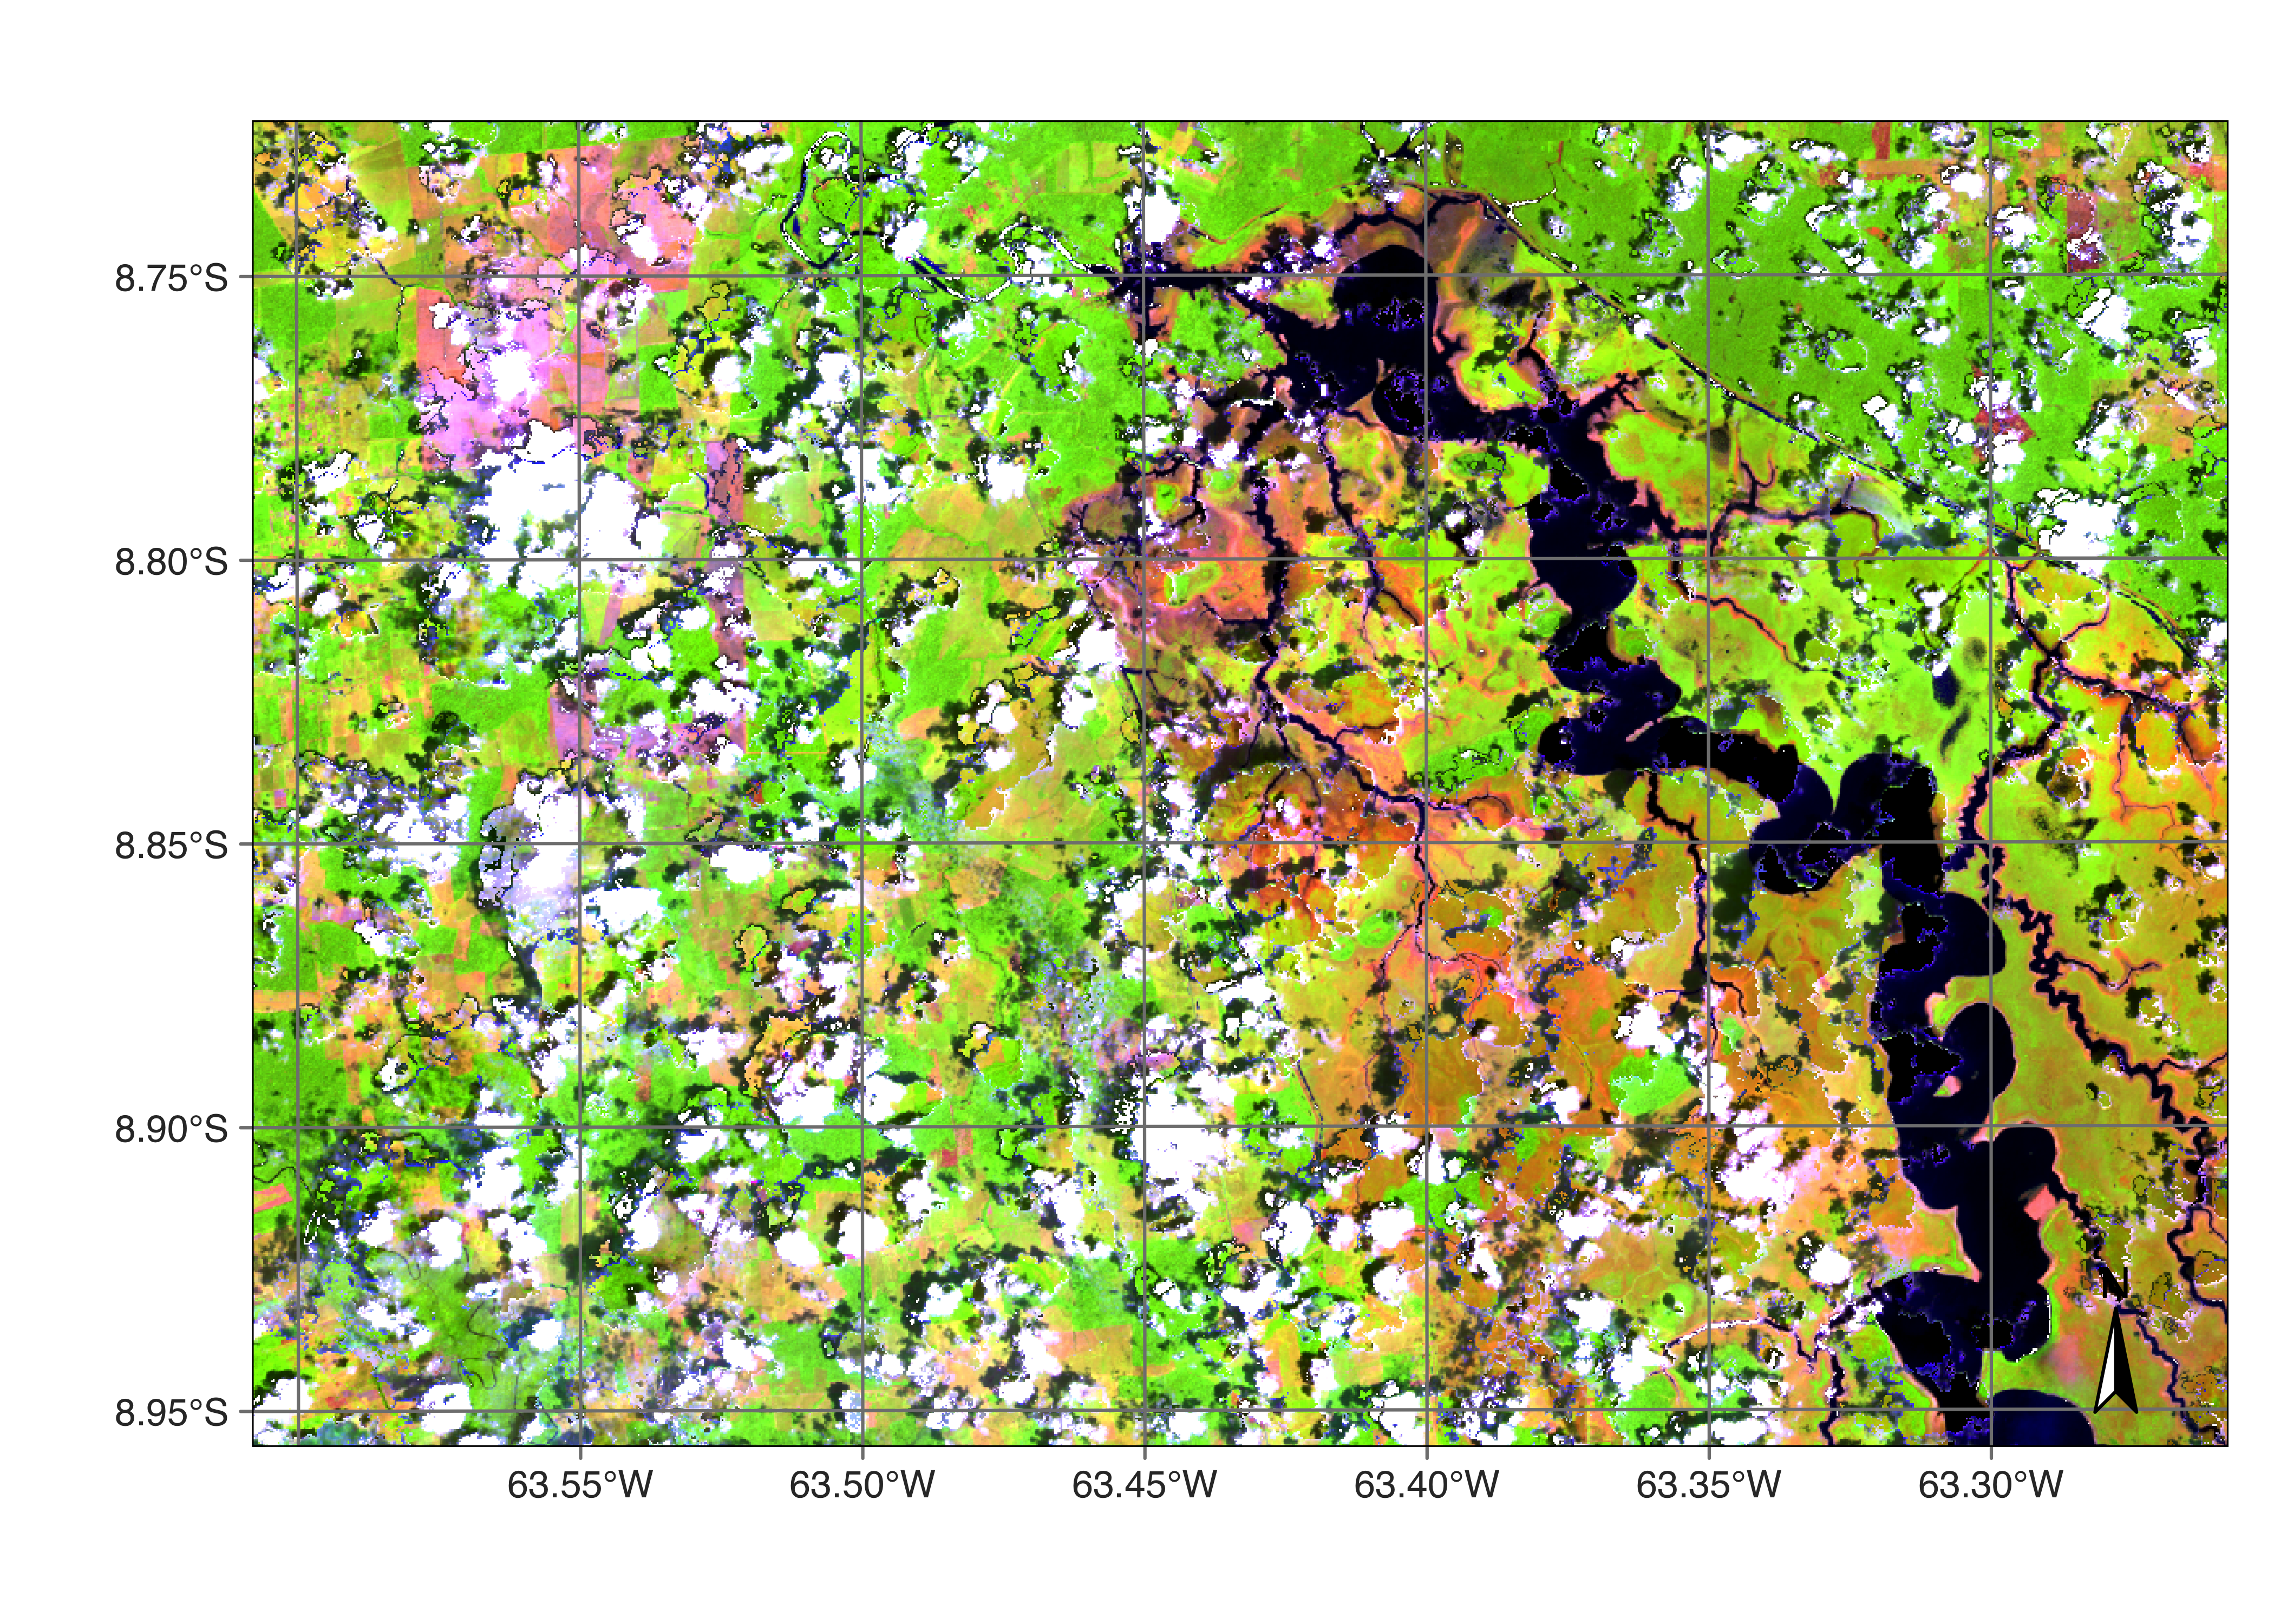 Area in Rondonia near Samuel dam in November 2021 (Source: Authors).